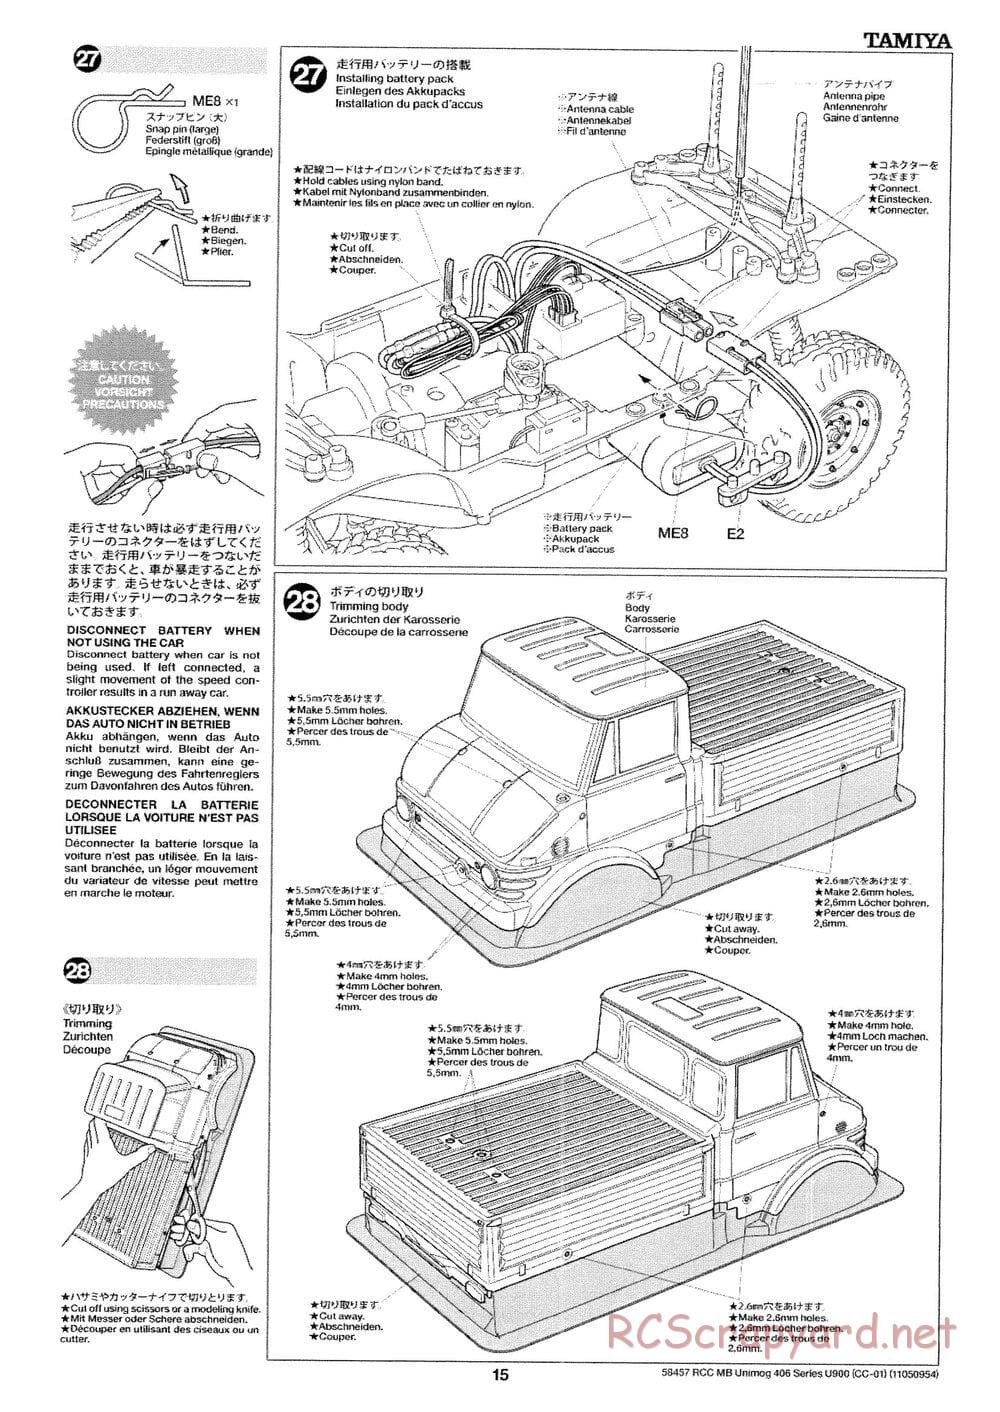 Tamiya - Mercedes-Benz Unimog 406 Series U900 - CC-01 Chassis - Manual - Page 15